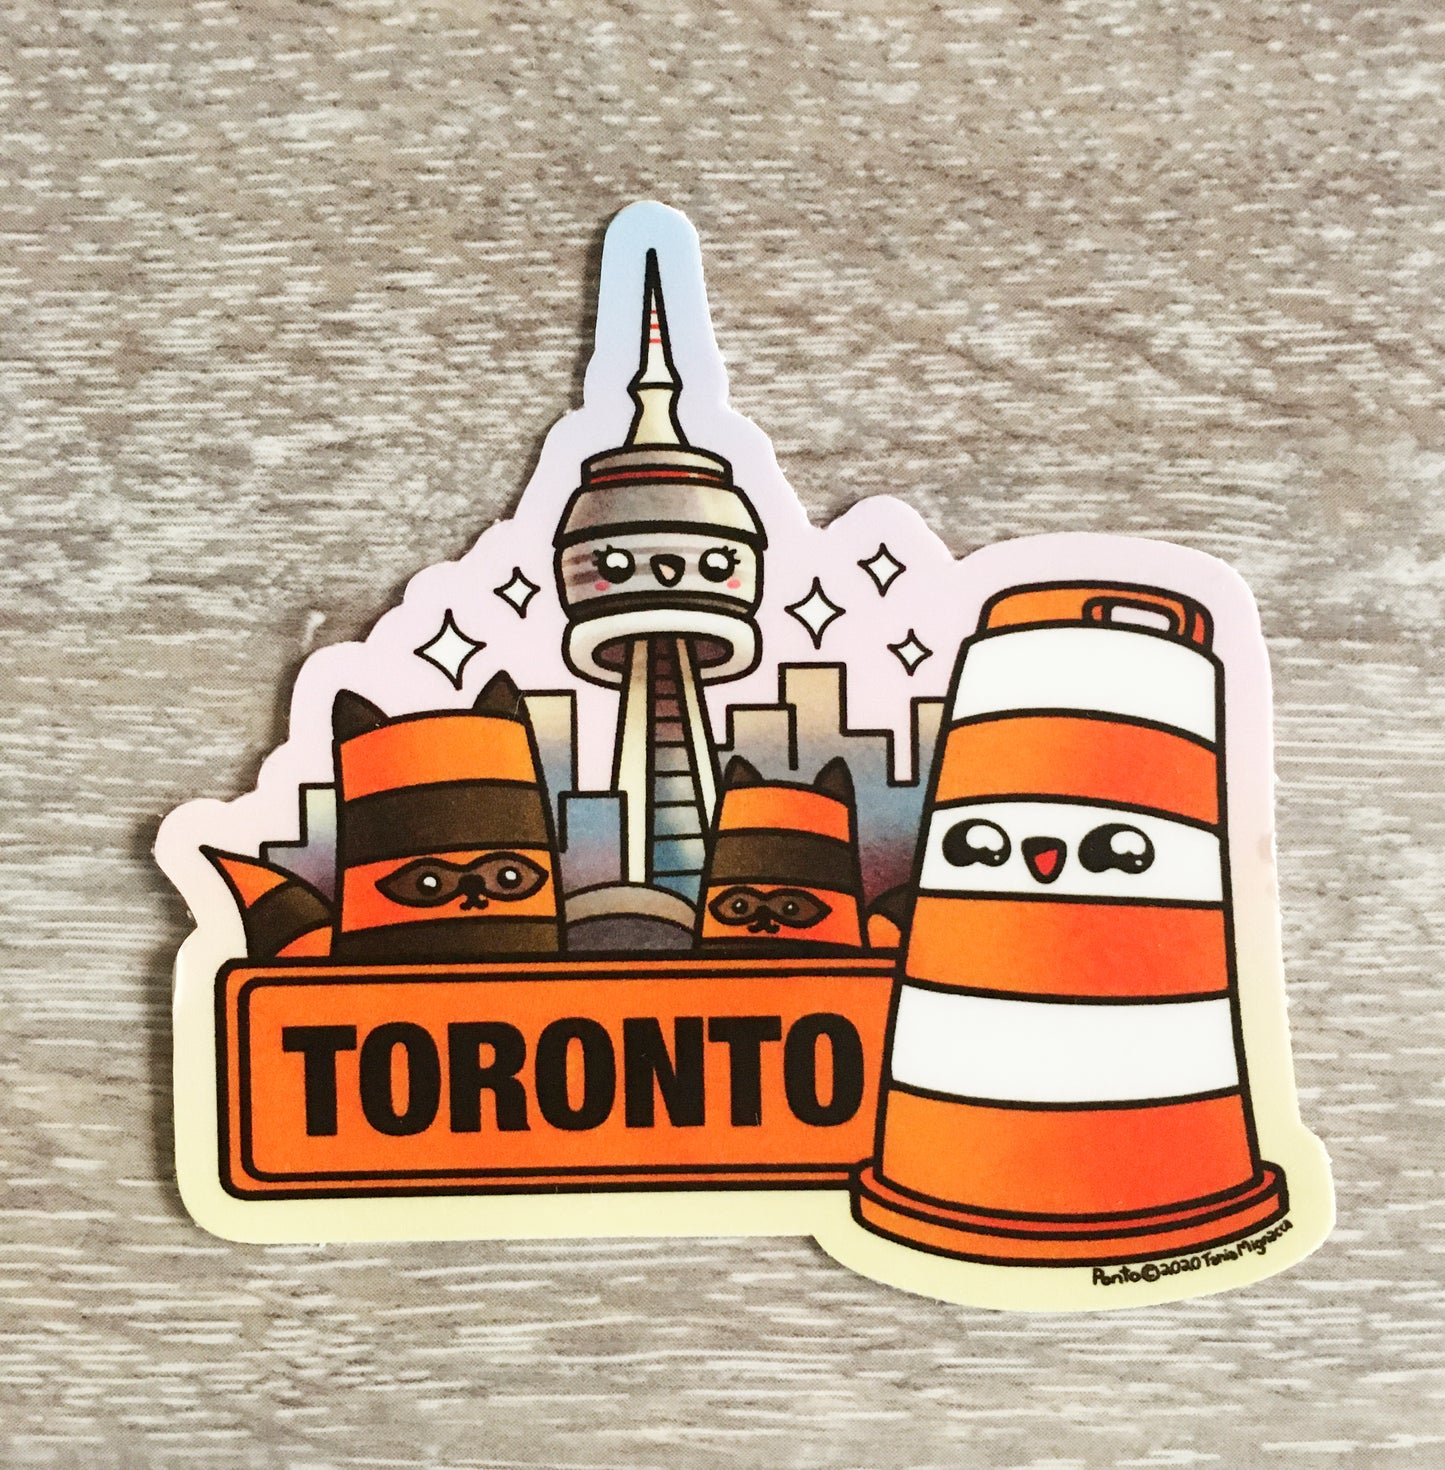 Ponto in Toronto Sticker Pack